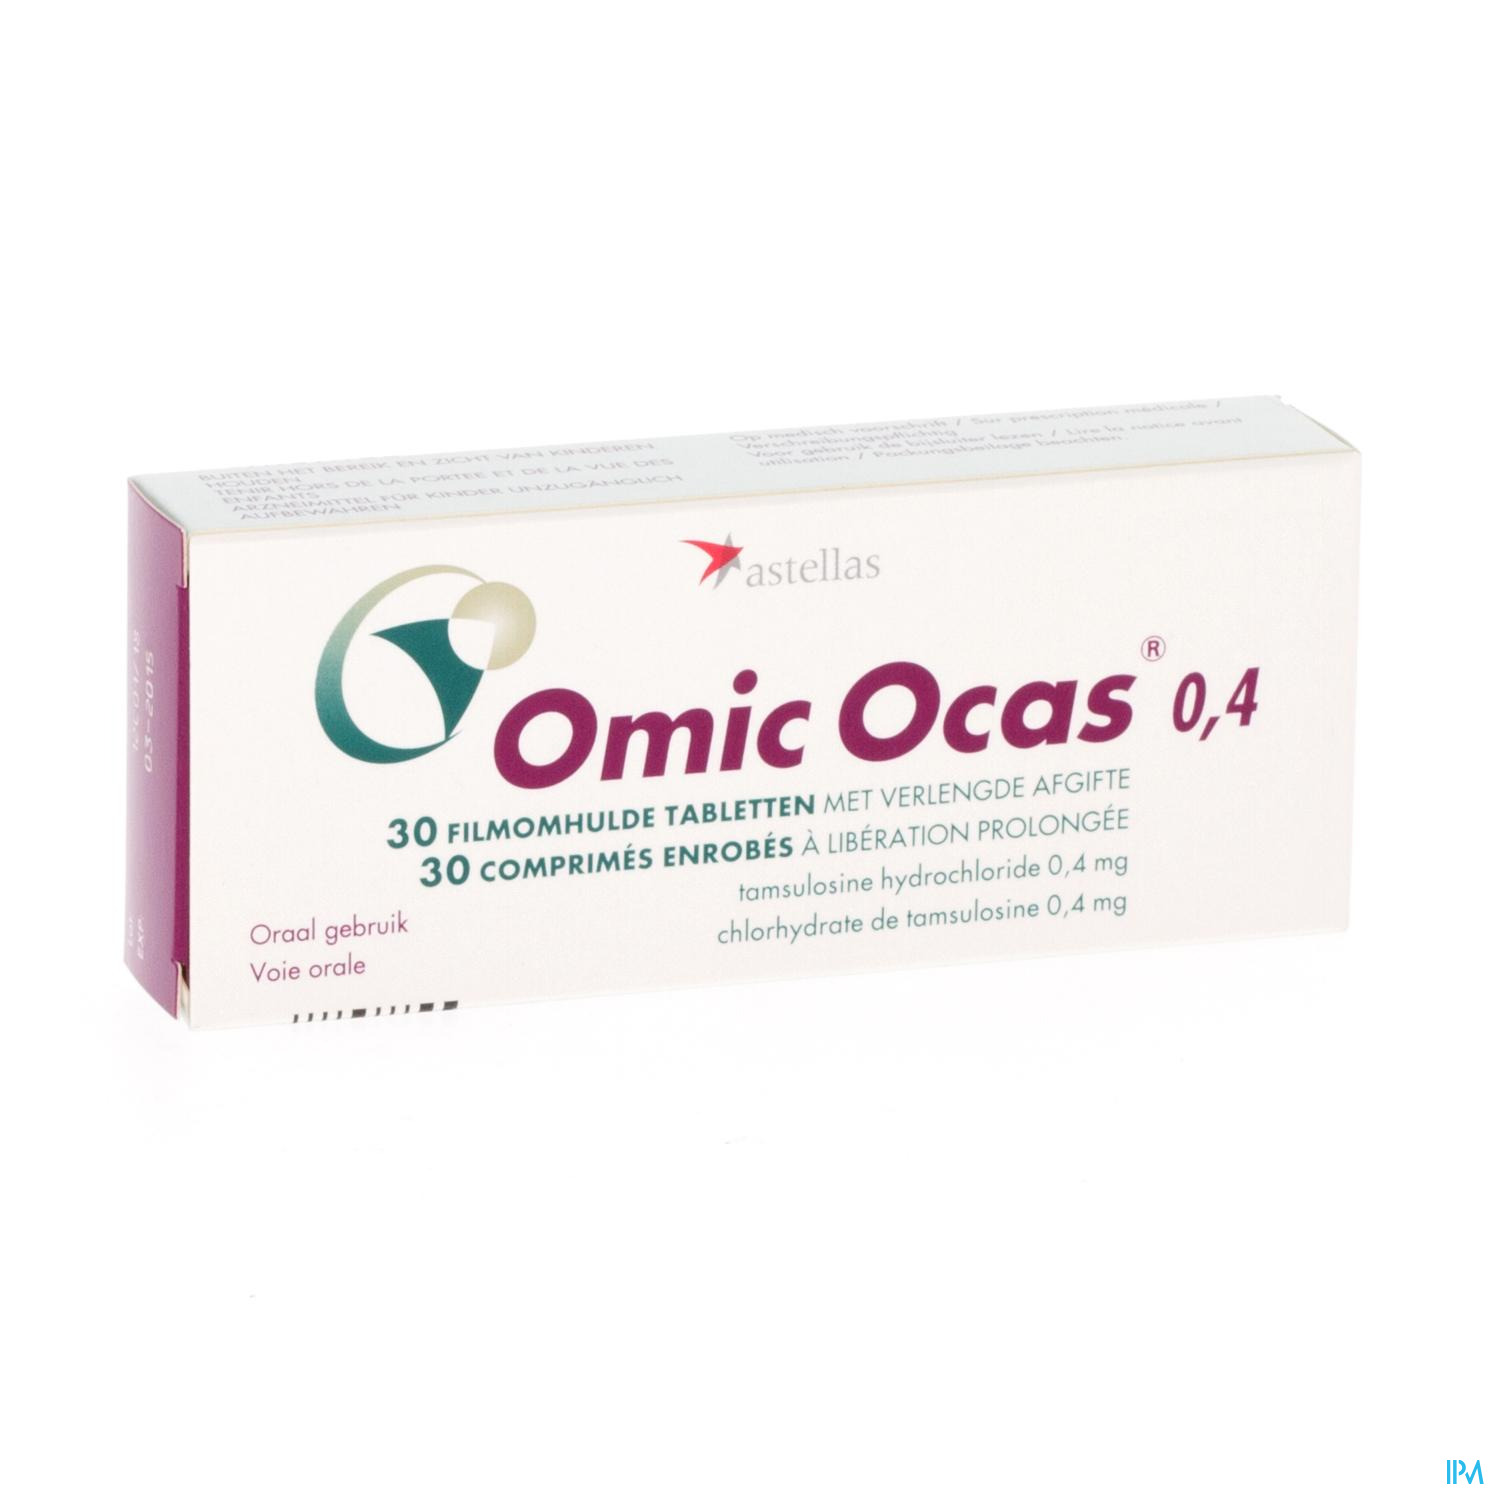 Omic Ocas Comp 30 X 0,4mg